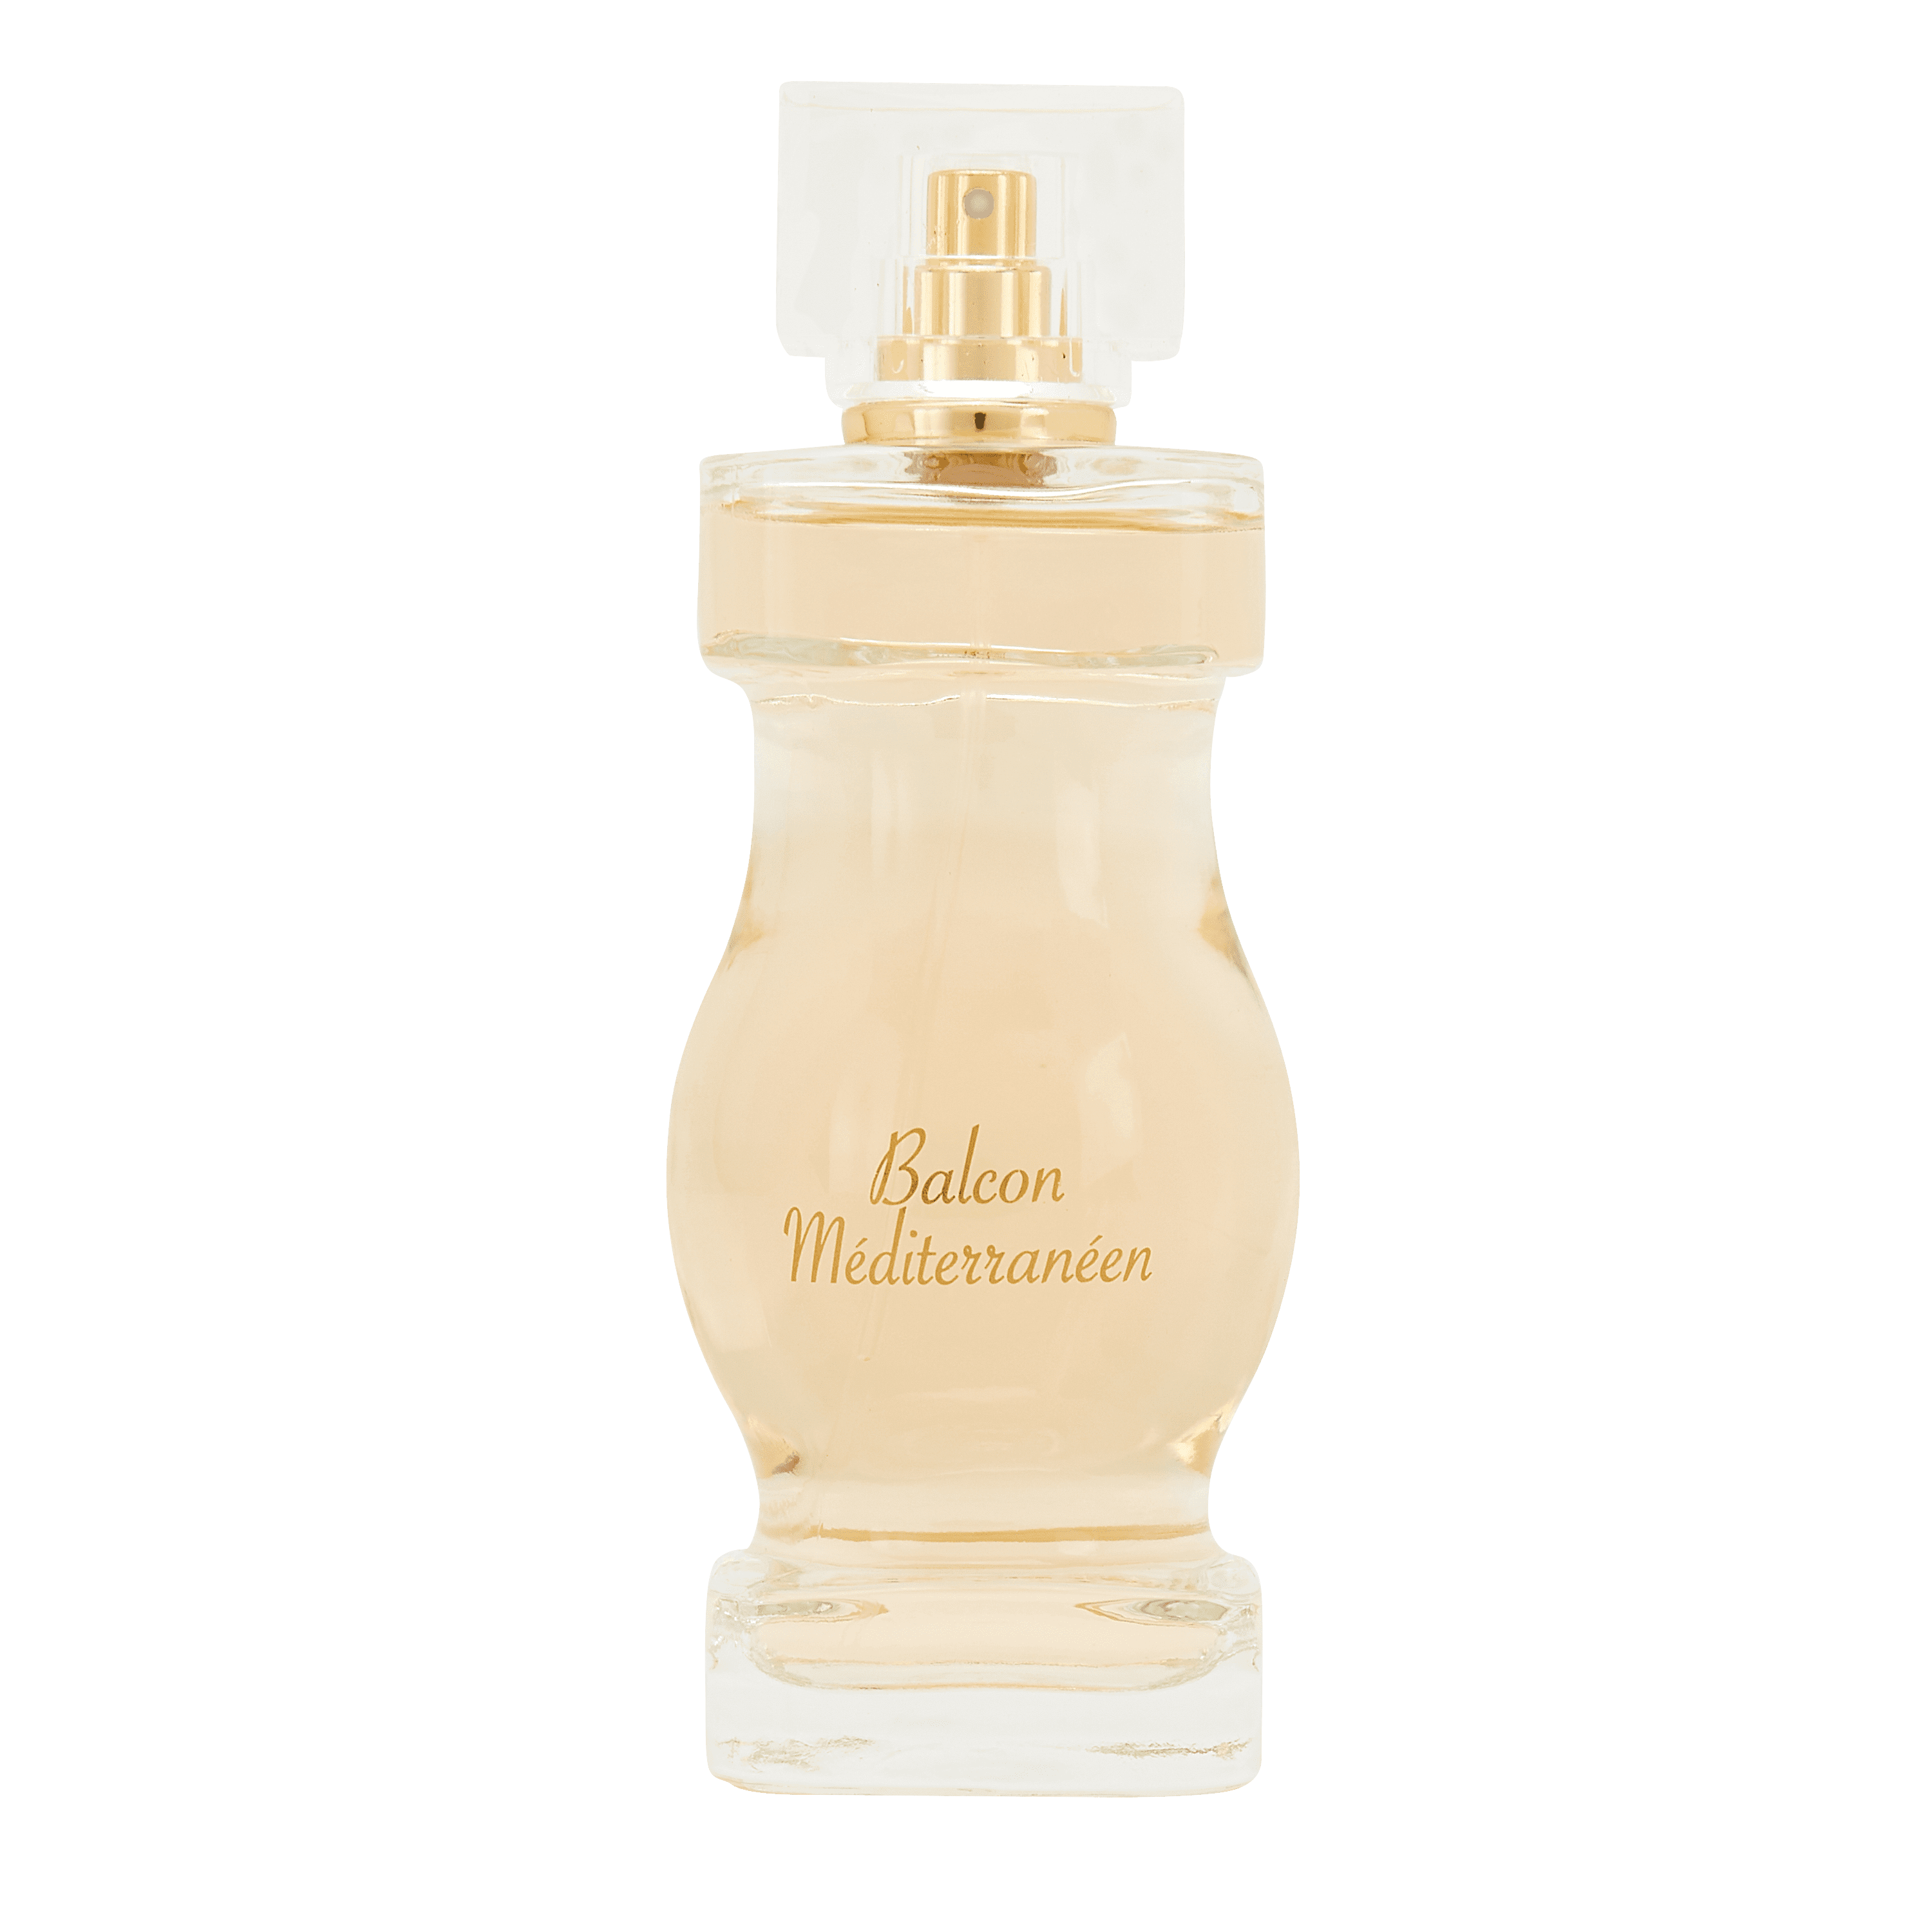 Женская парфюмированная вода Jean Arthes Balcon Mediterraneen, 100 мл geparlys iwan парфюмерная вода 100 мл для женщин